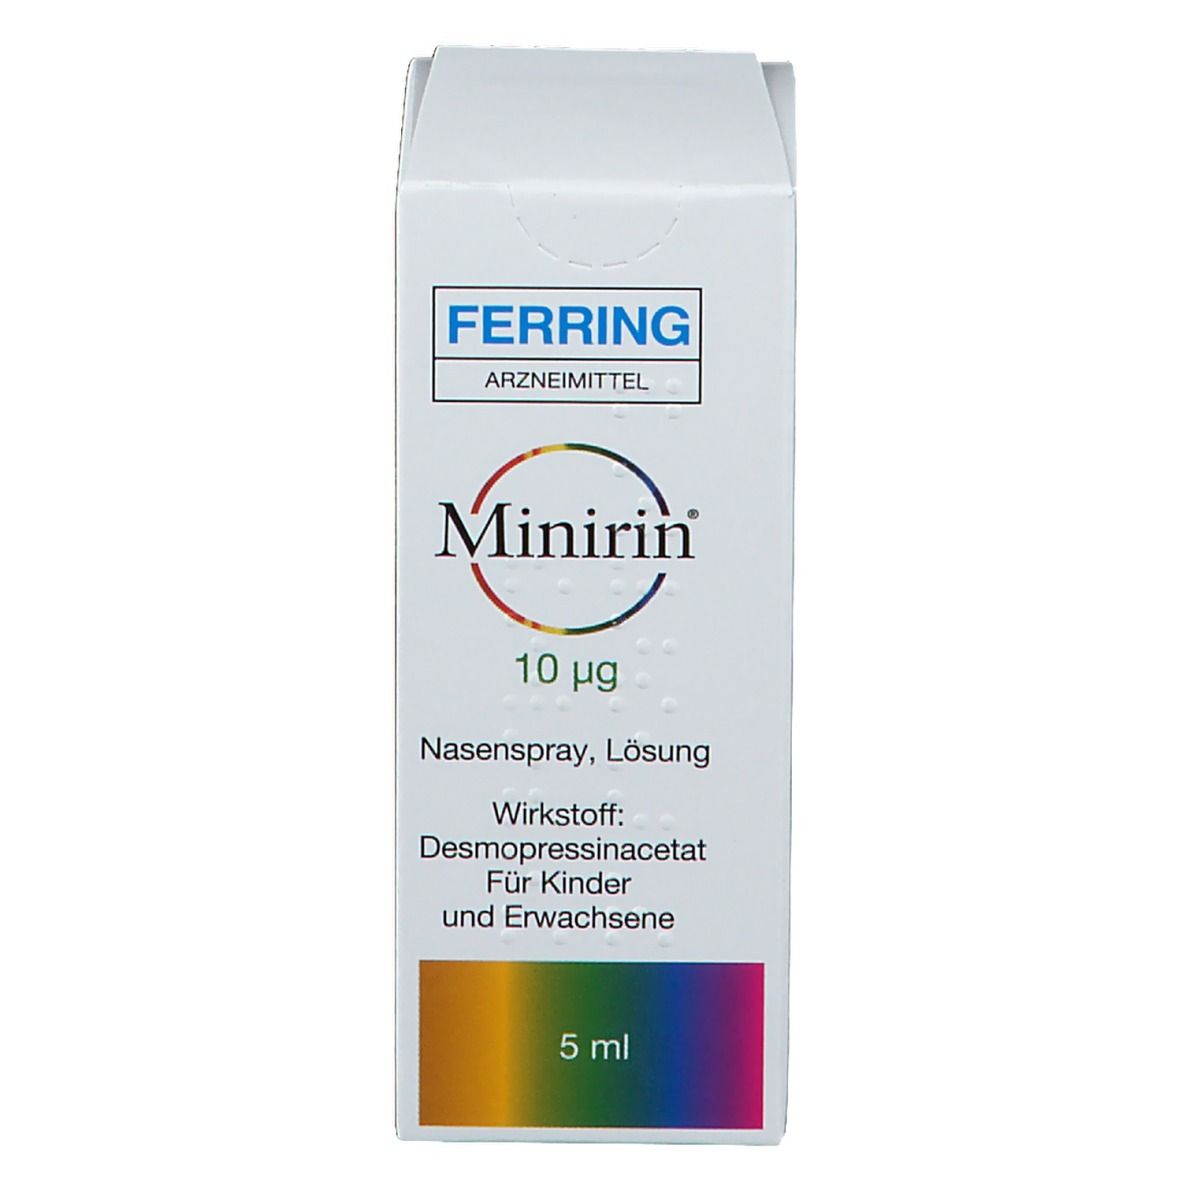 Minirin® 10 µg